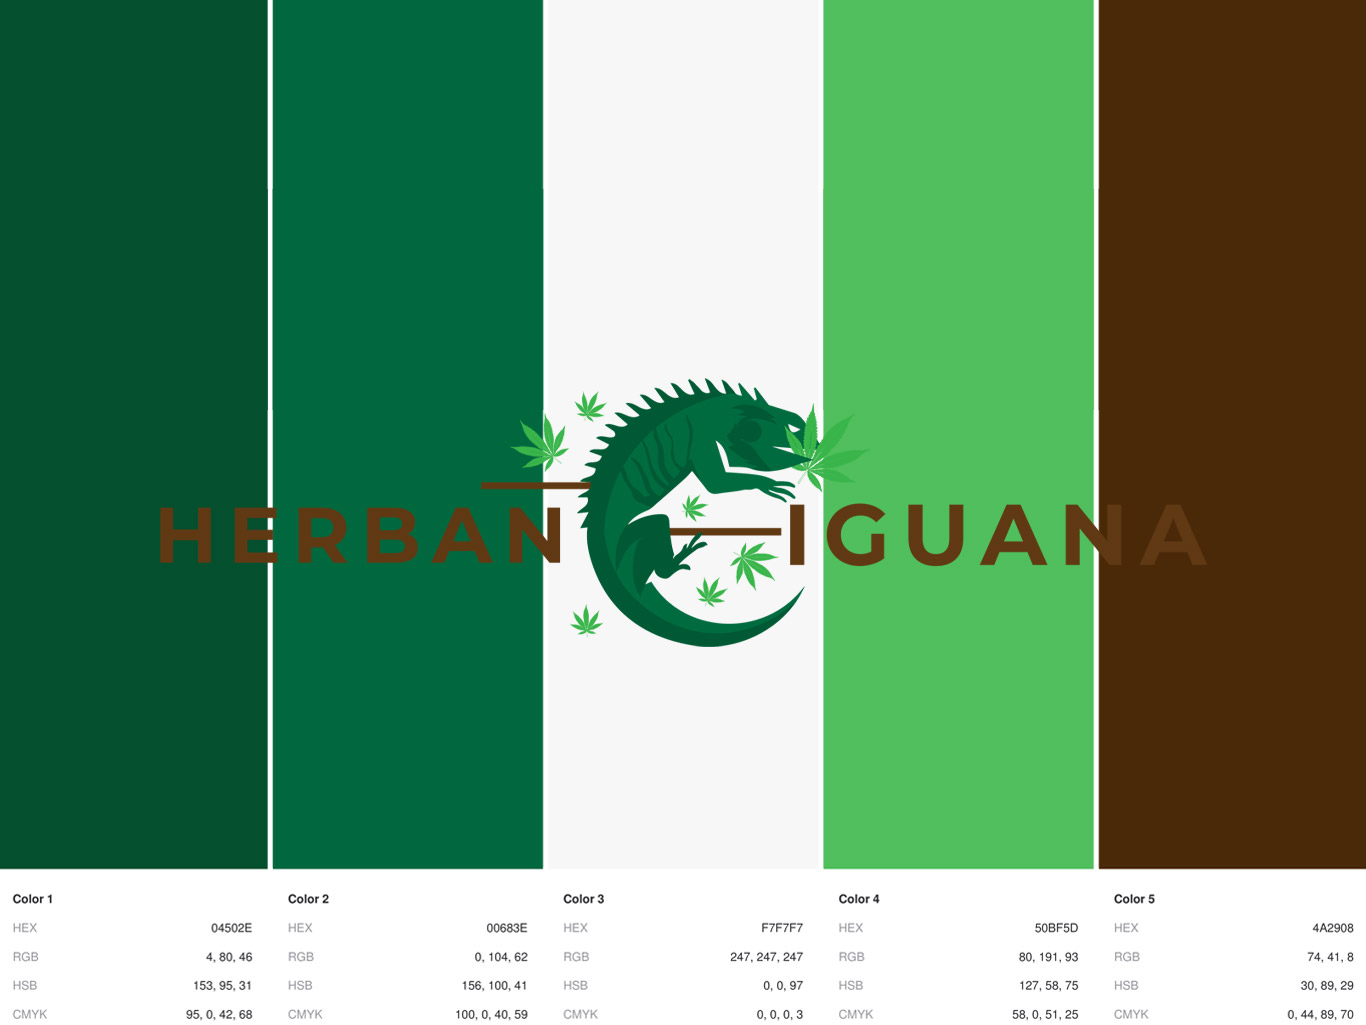 Herban Iguana Color Palette